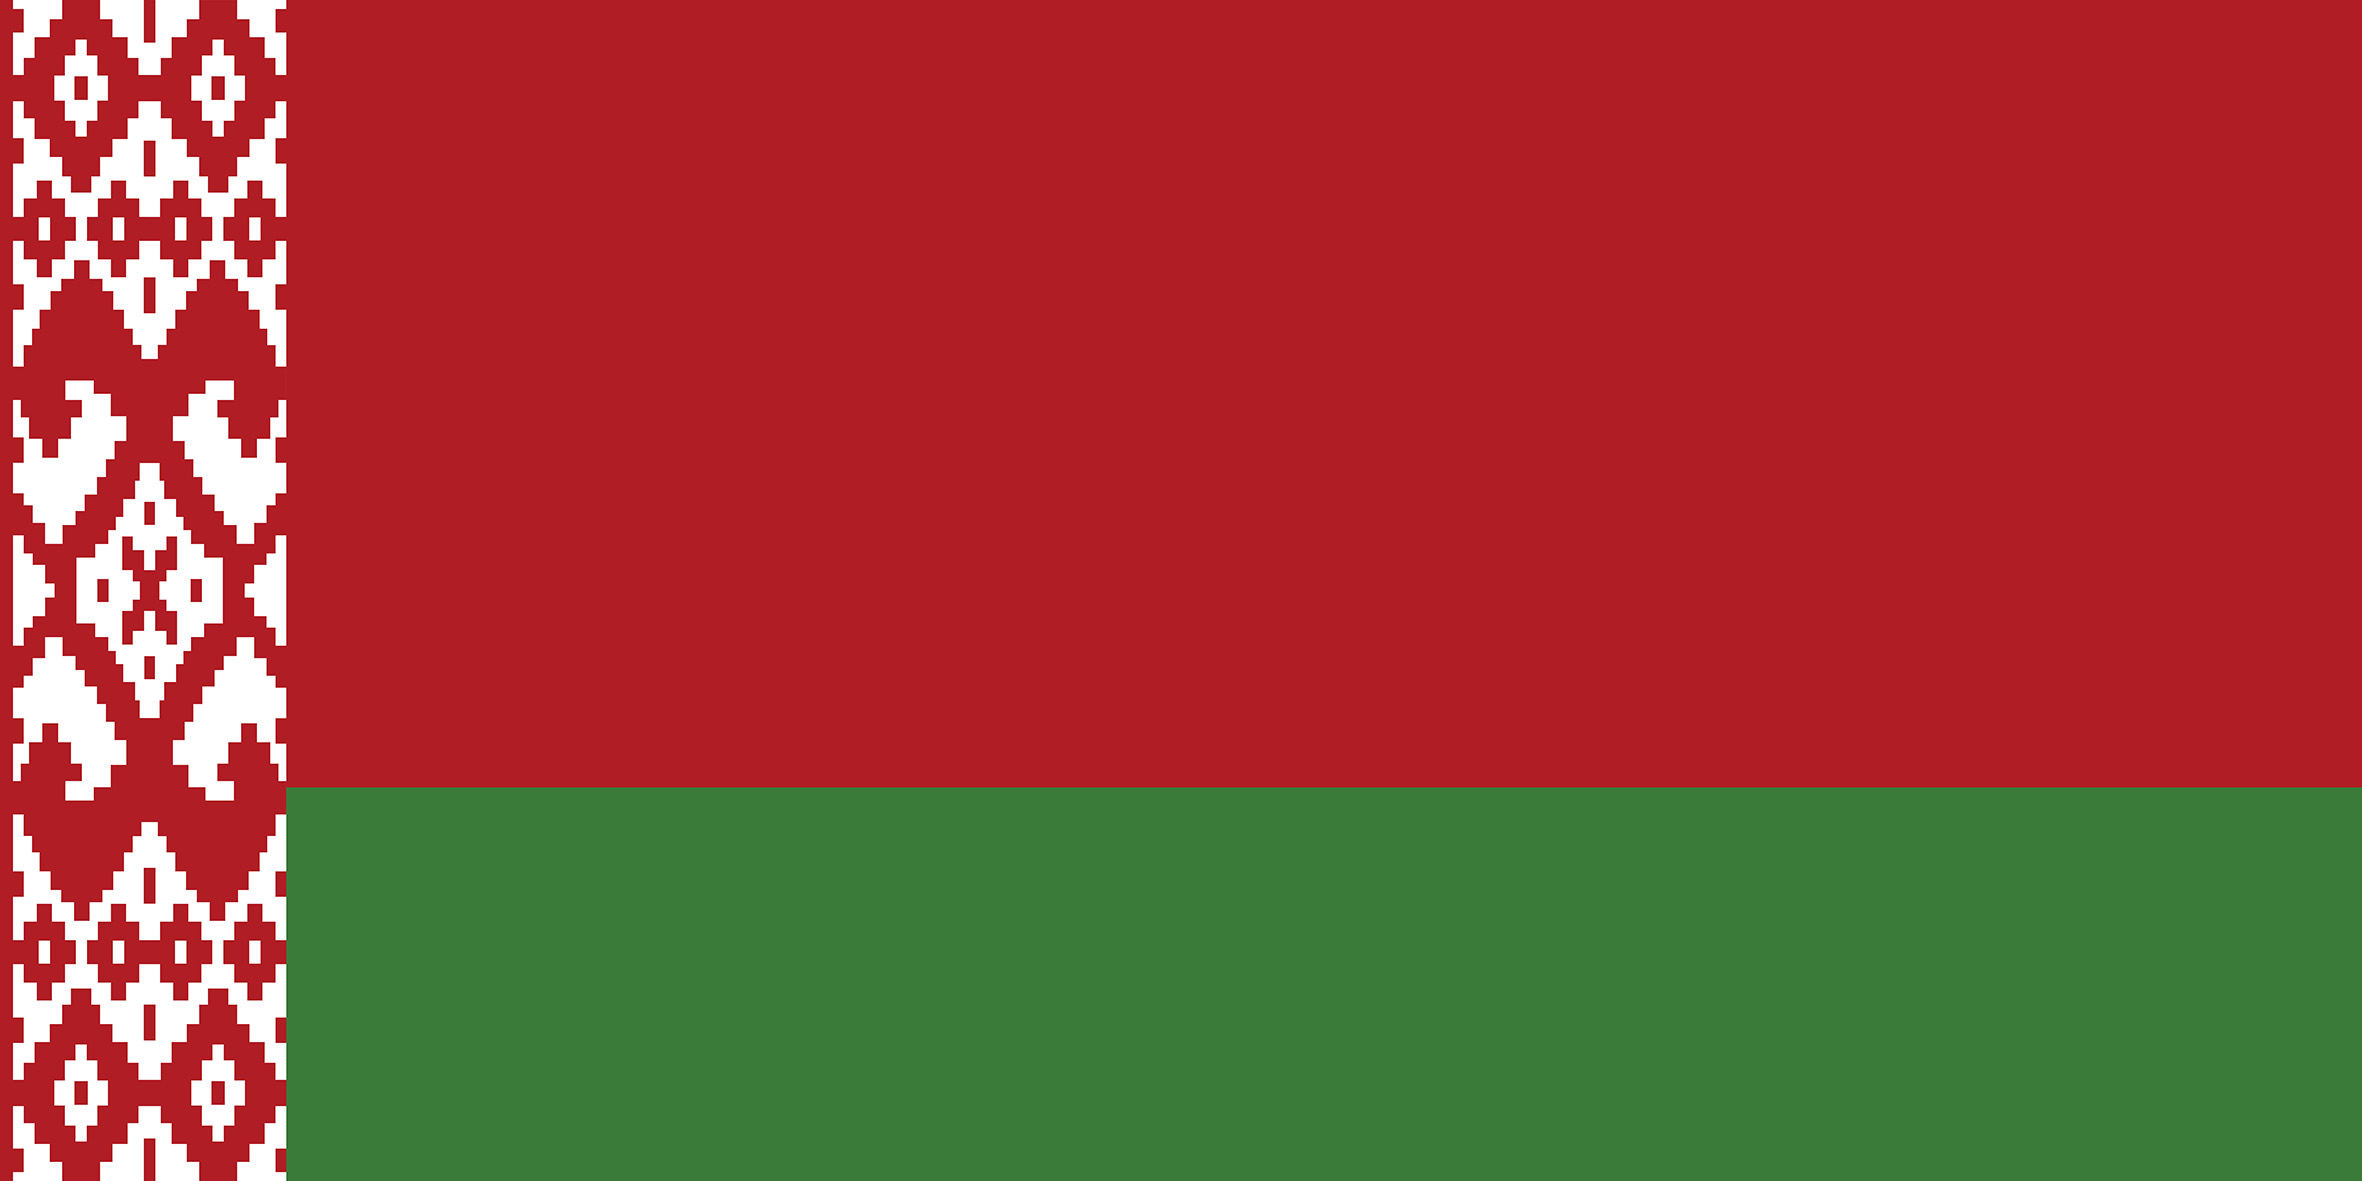 flag_Belarus_2.jpg (207 KB)